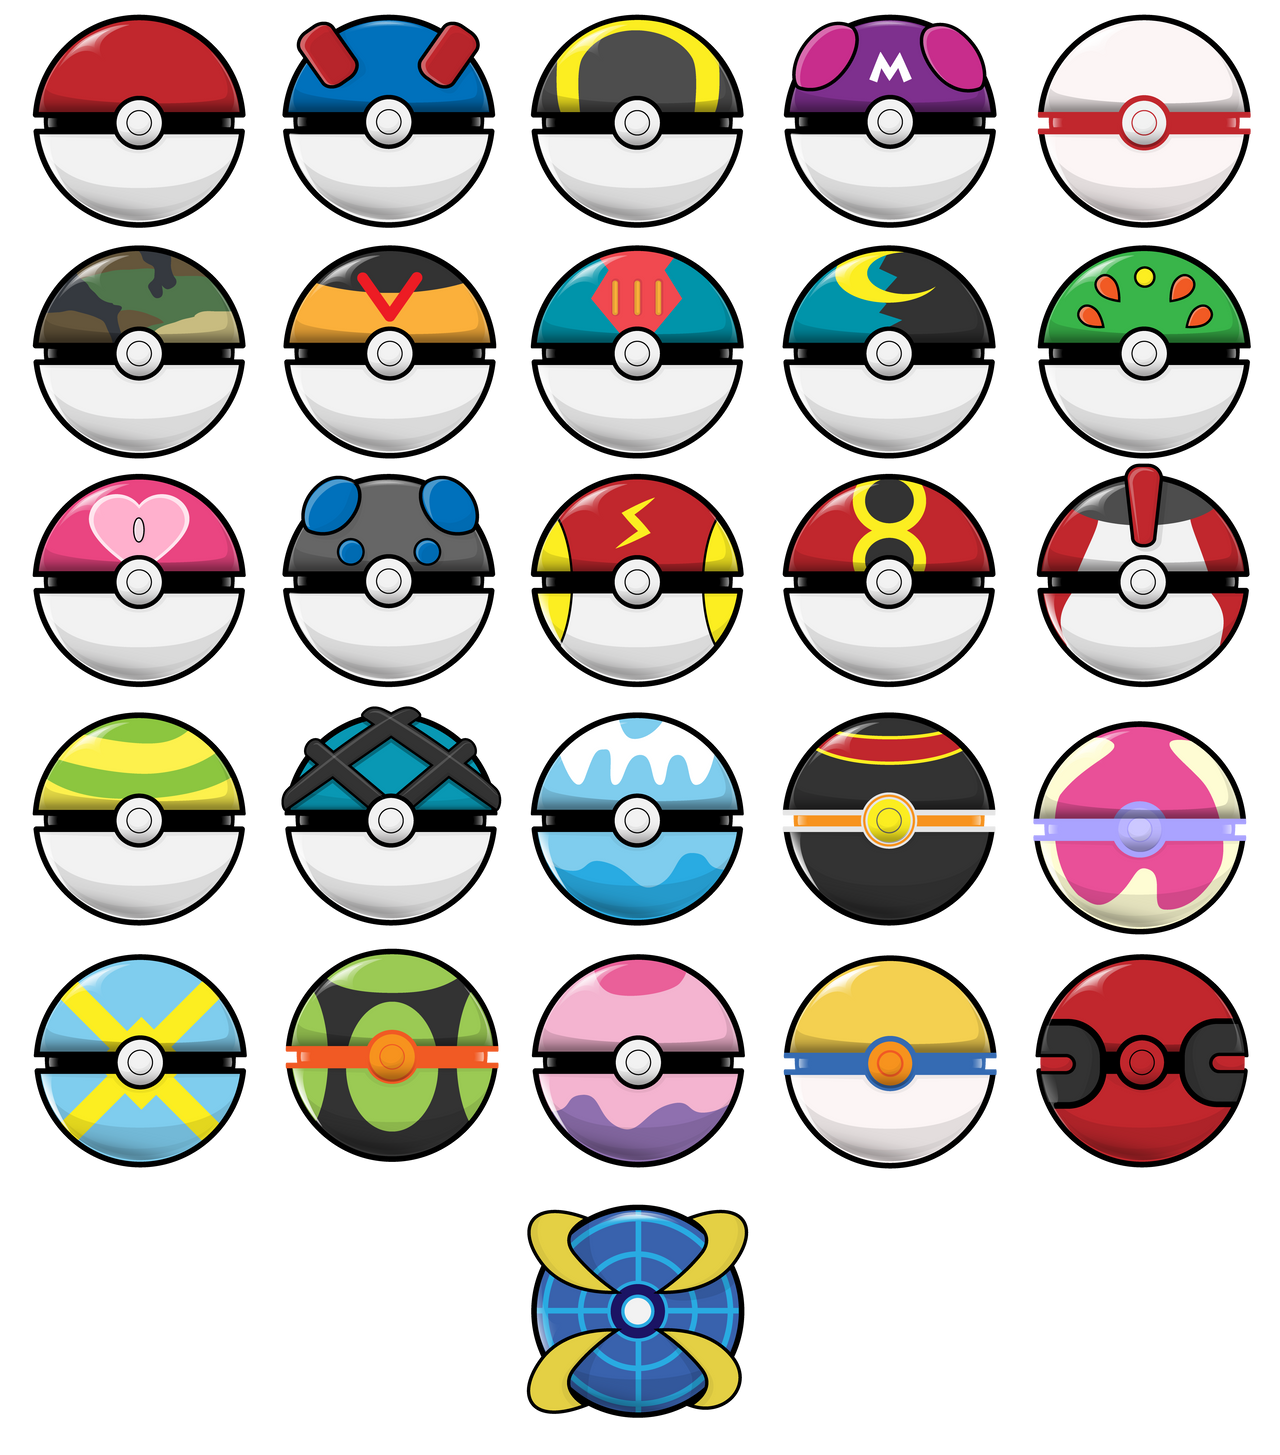 Pokeball Icons by DarthSuki on DeviantArt